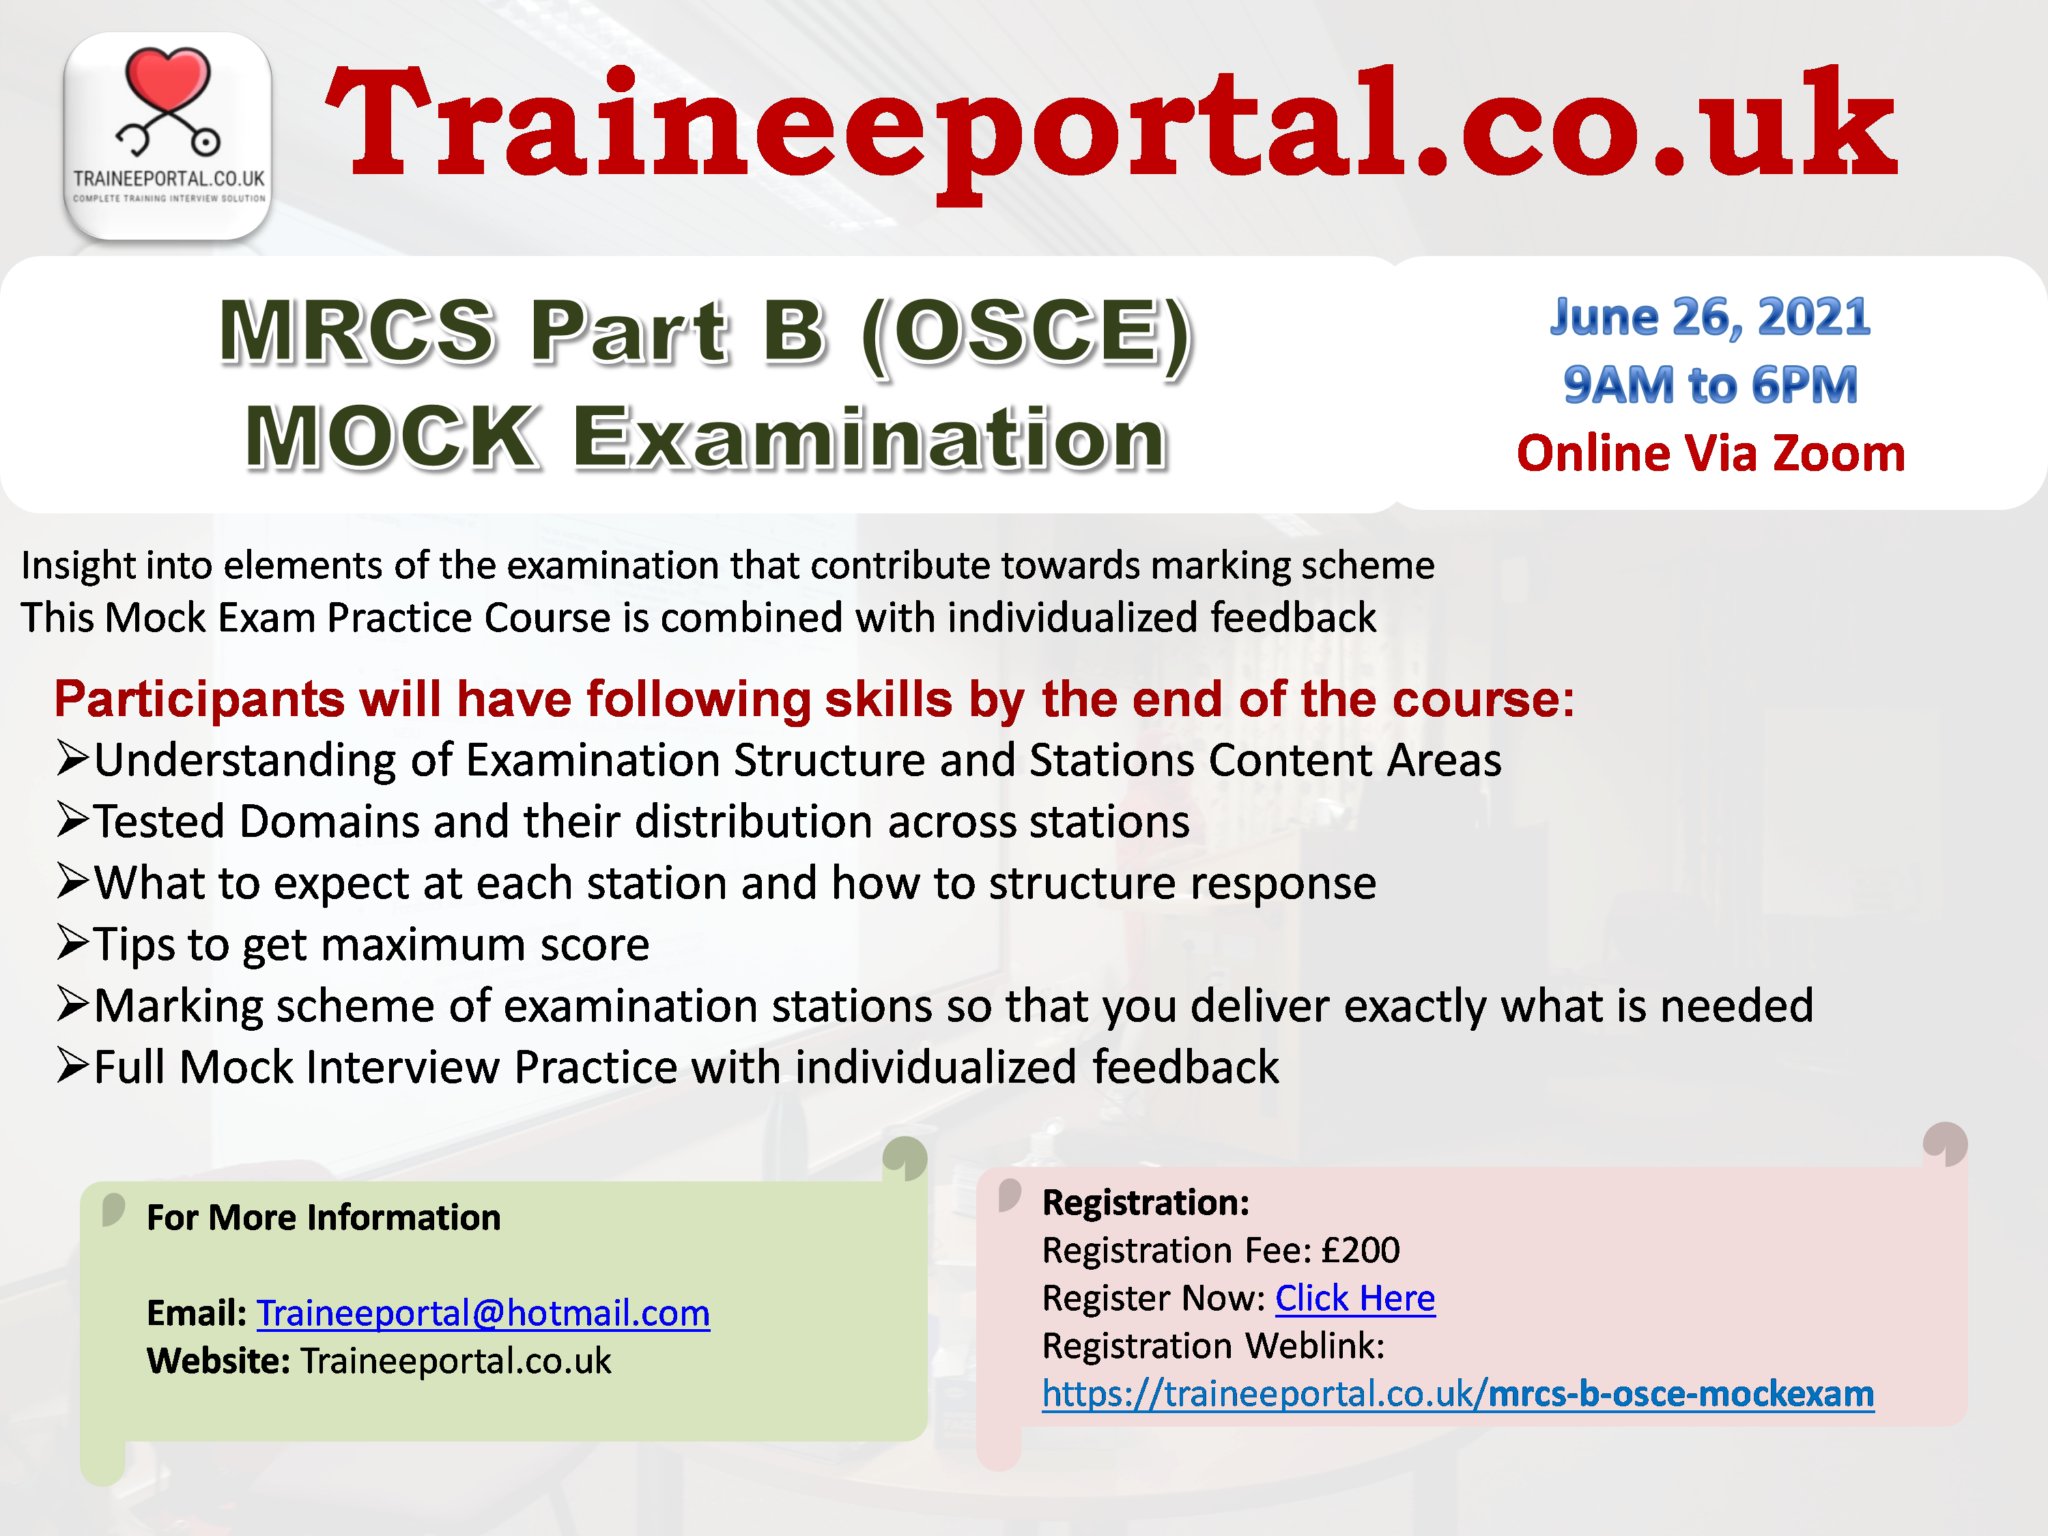 MRCS Part B OSCE Mock Examination Traineeportal.co.uk